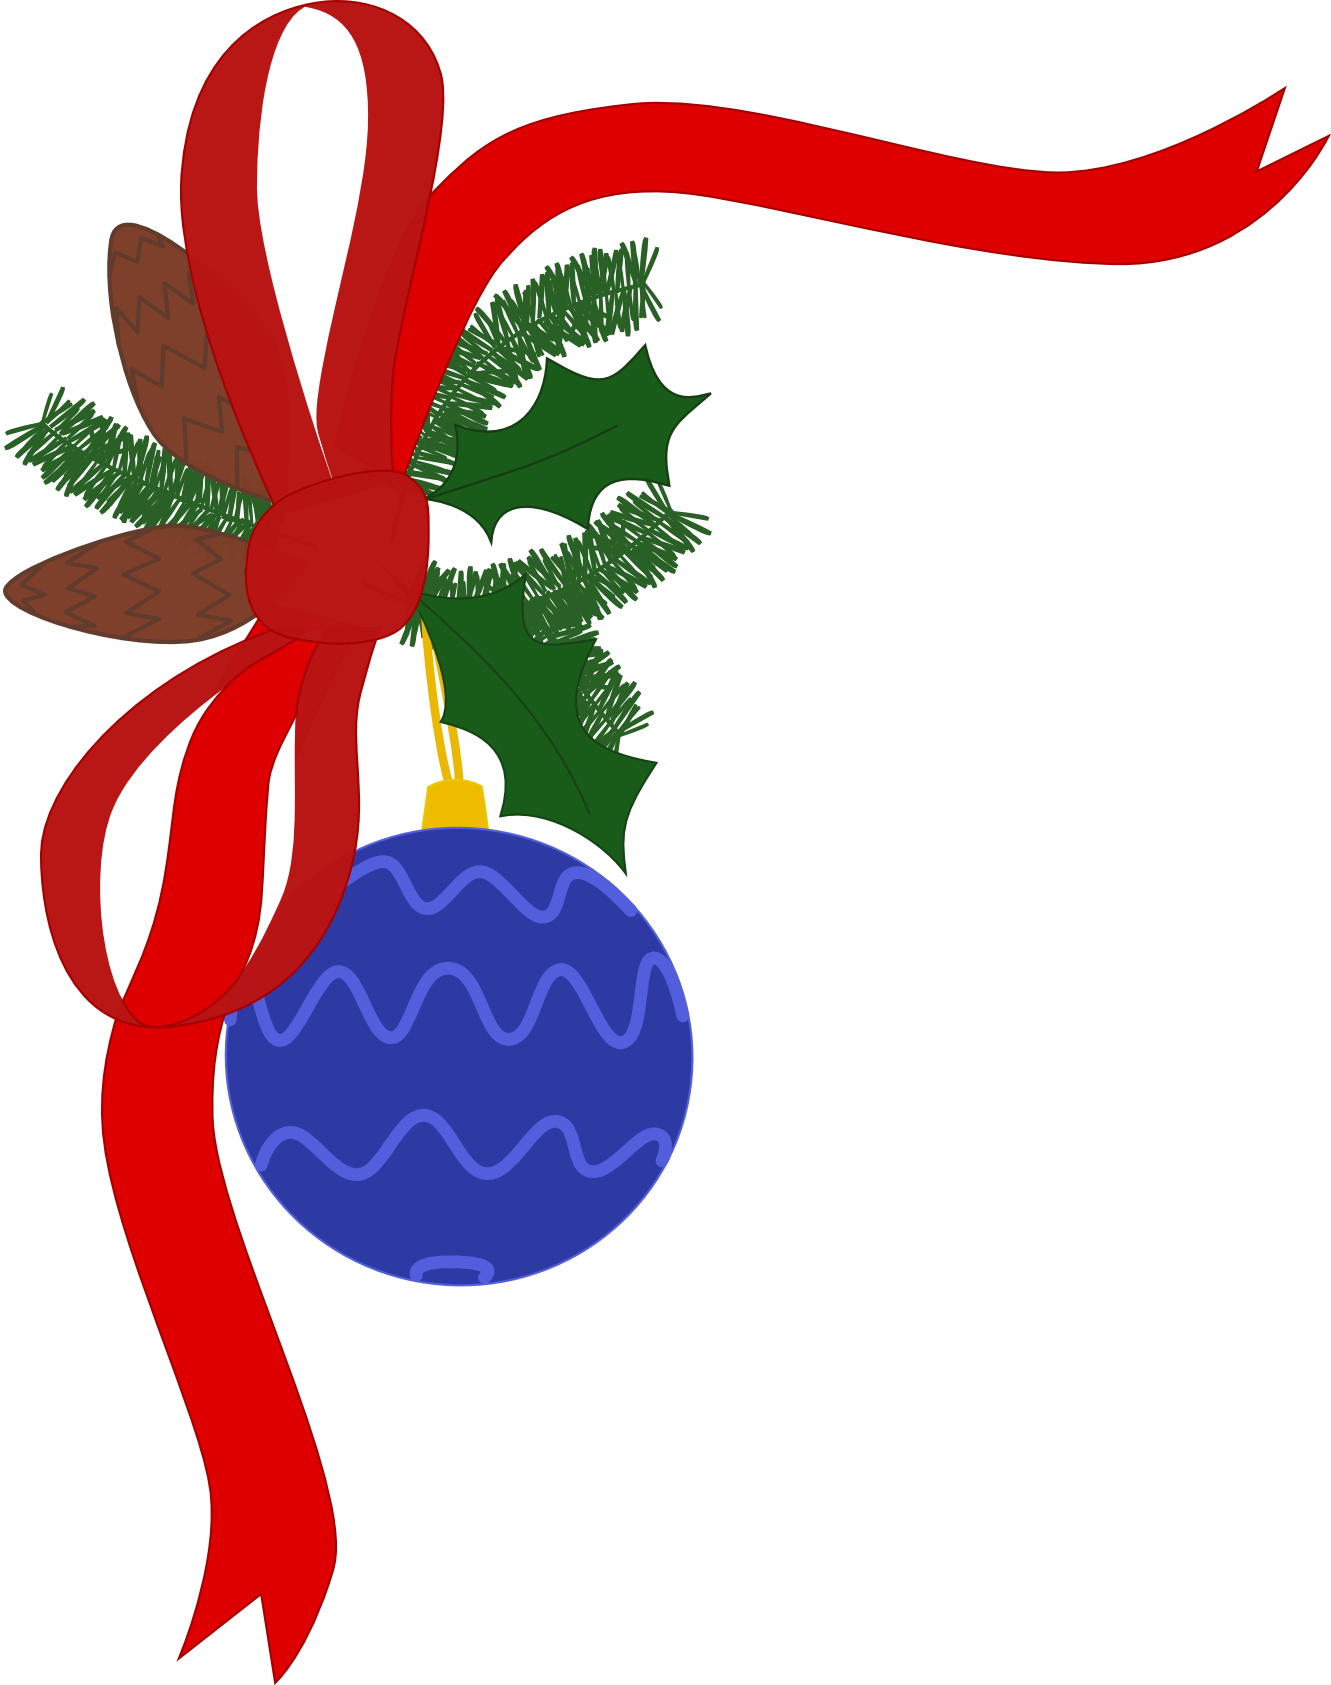 Christmas Decorations Clip Art Free - ClipArt Best